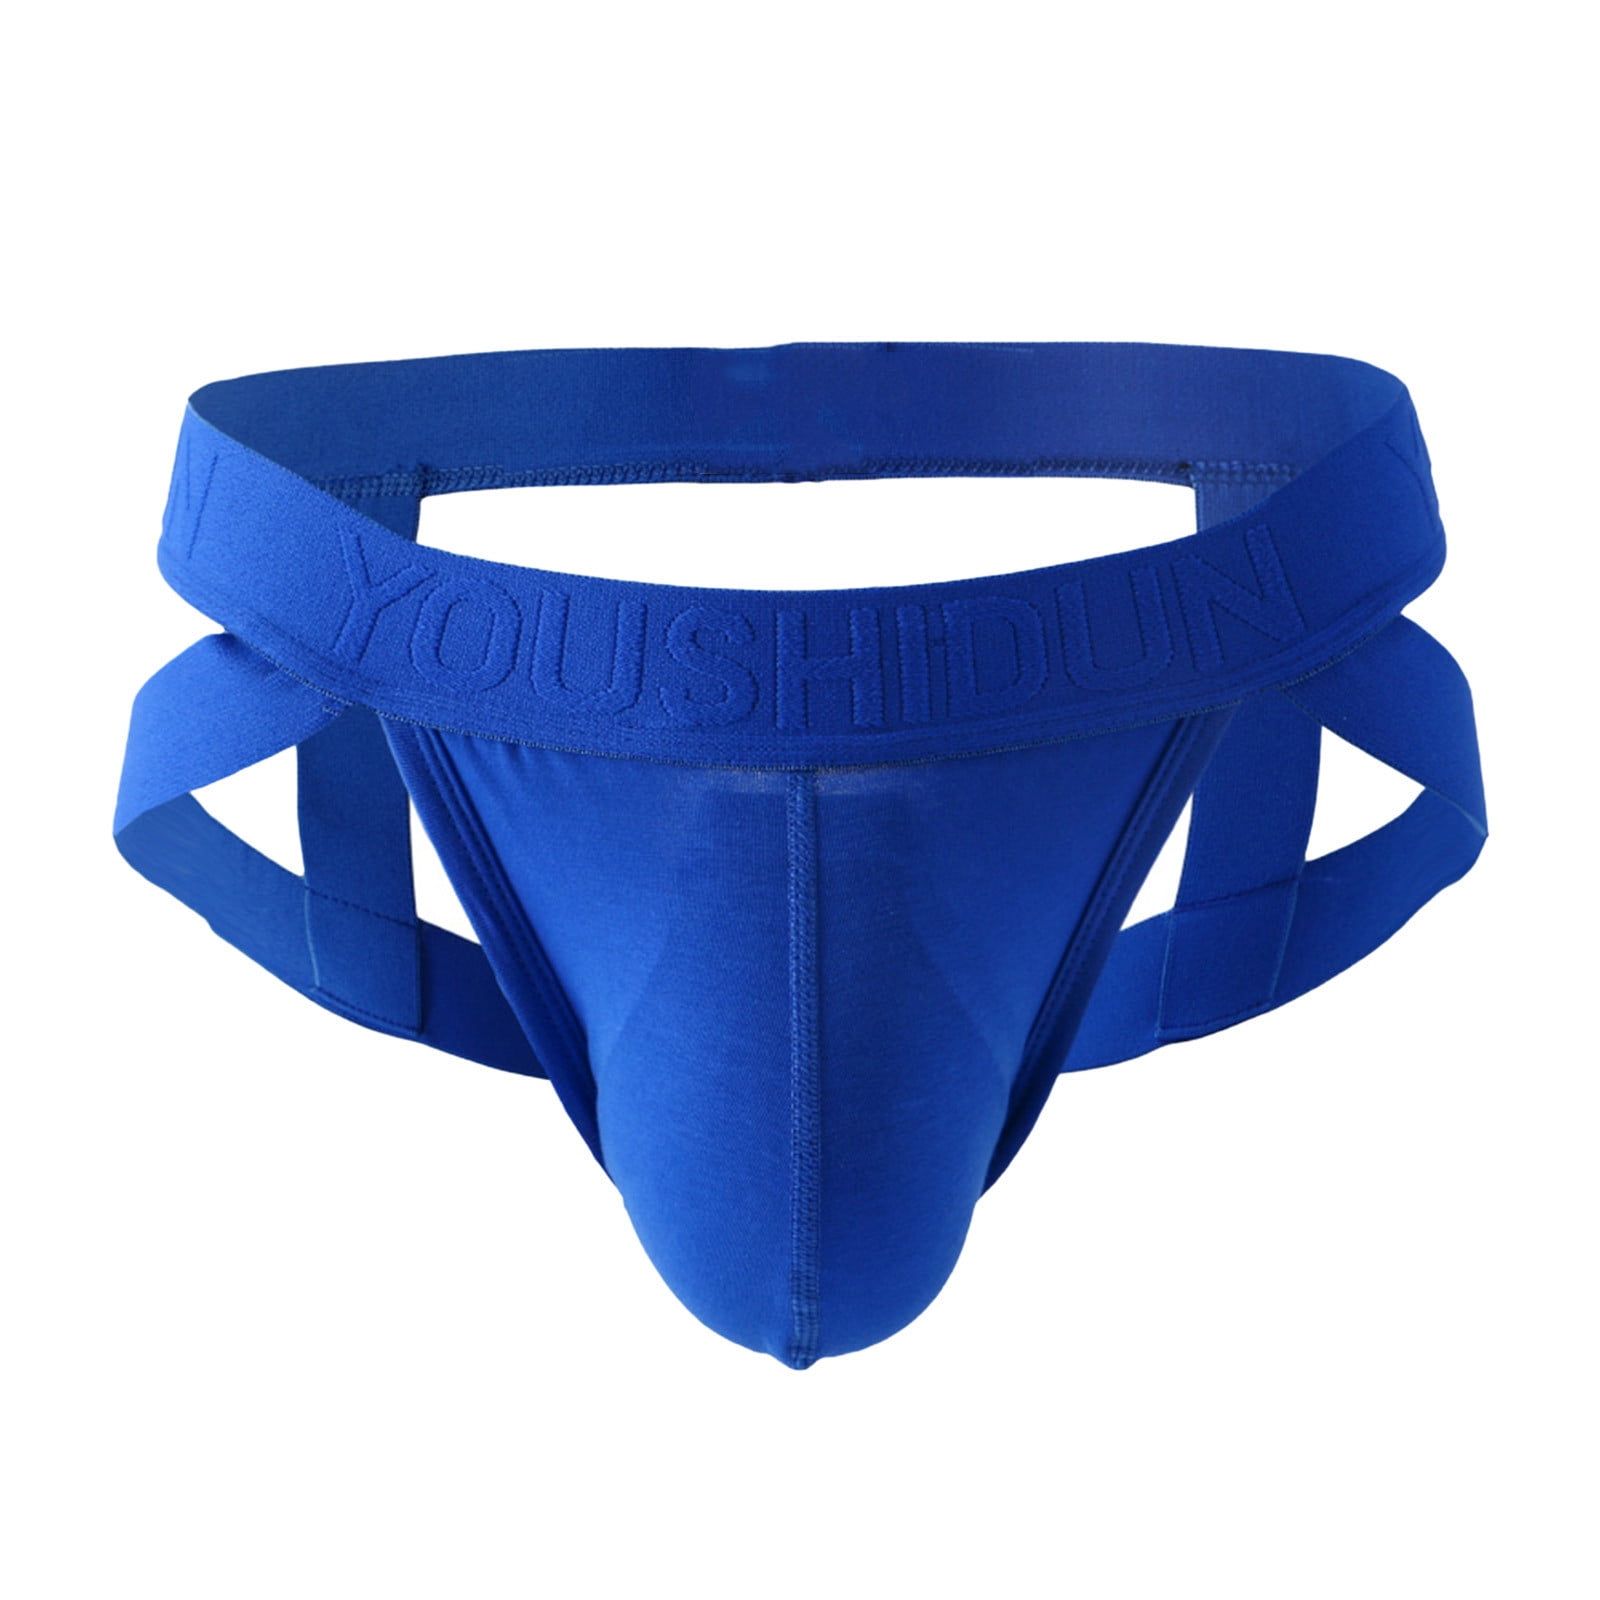 ABAFIP Mens Jockstrap Underwear Low Waist Mesh Breathable Athletic